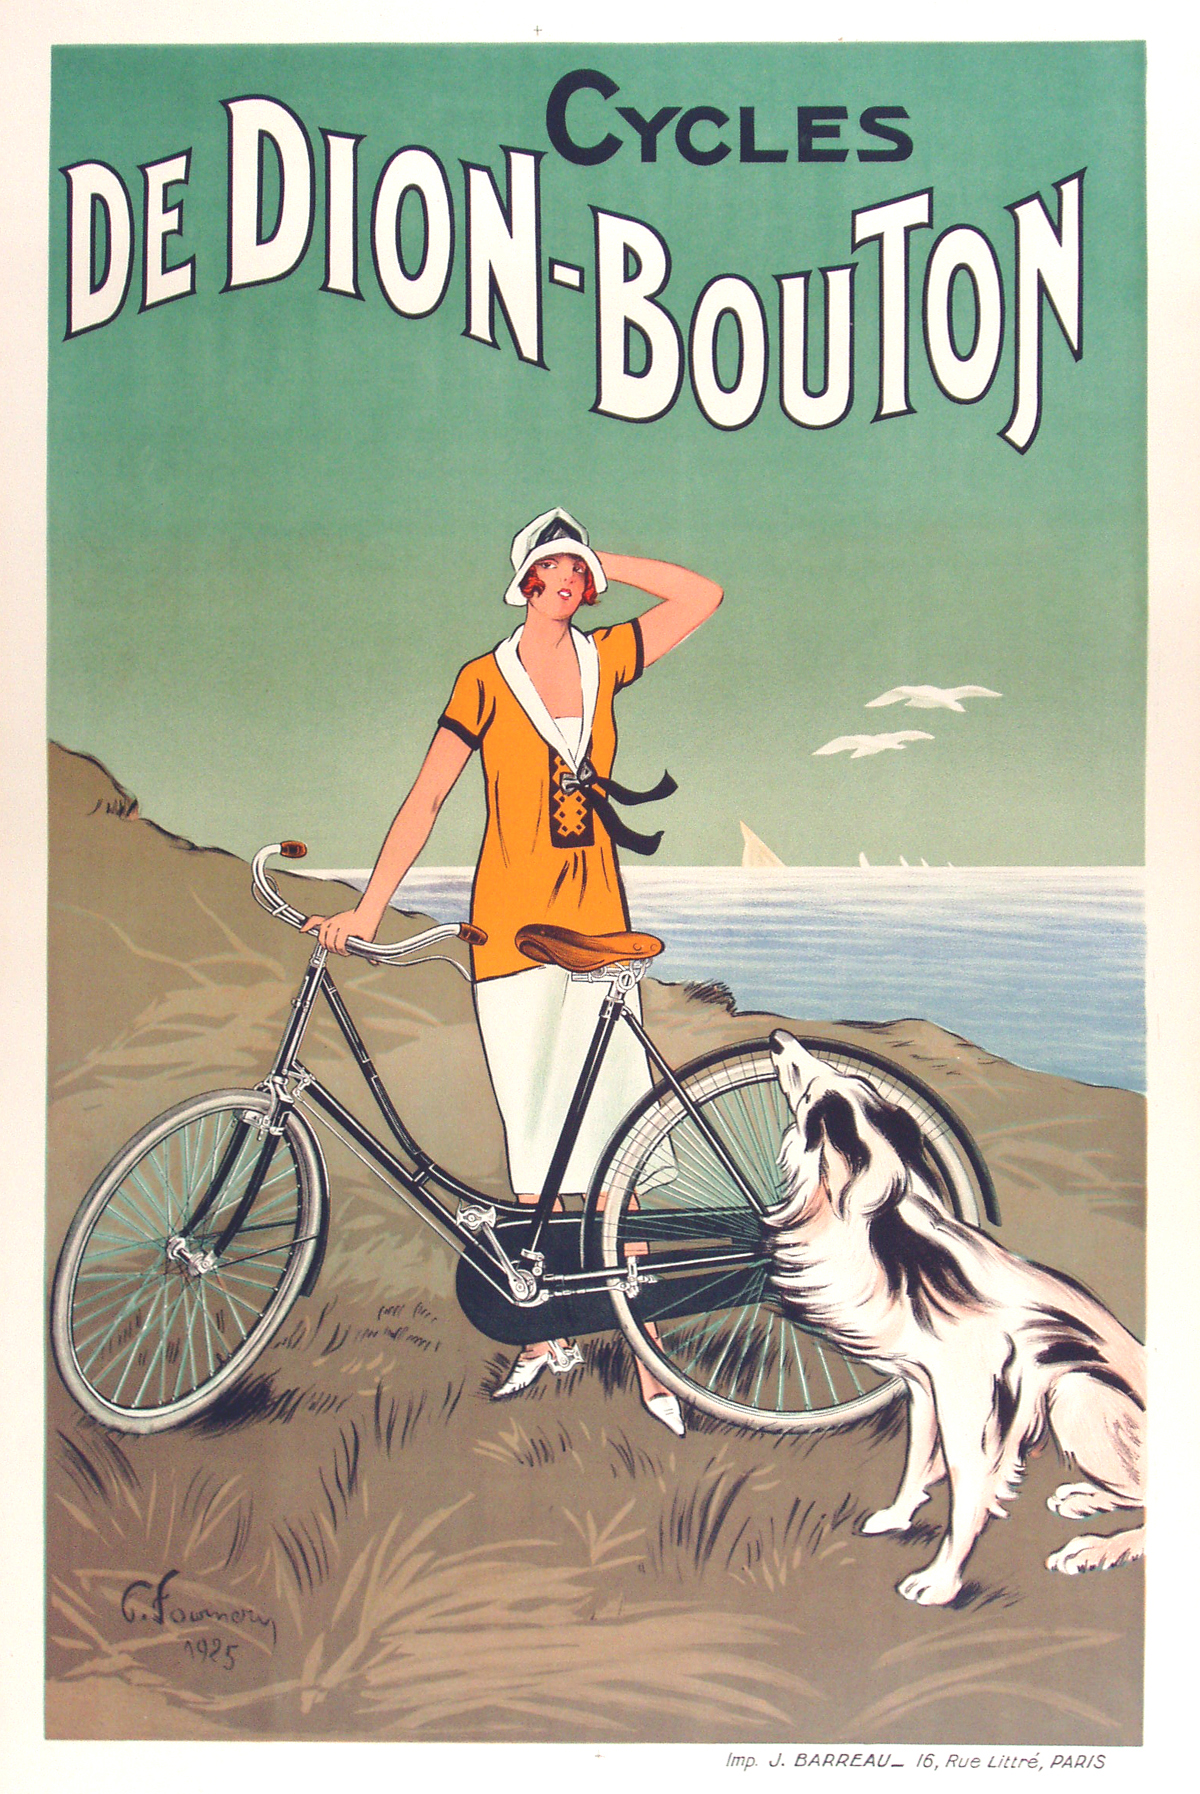 Cycles de Dion-Bouton